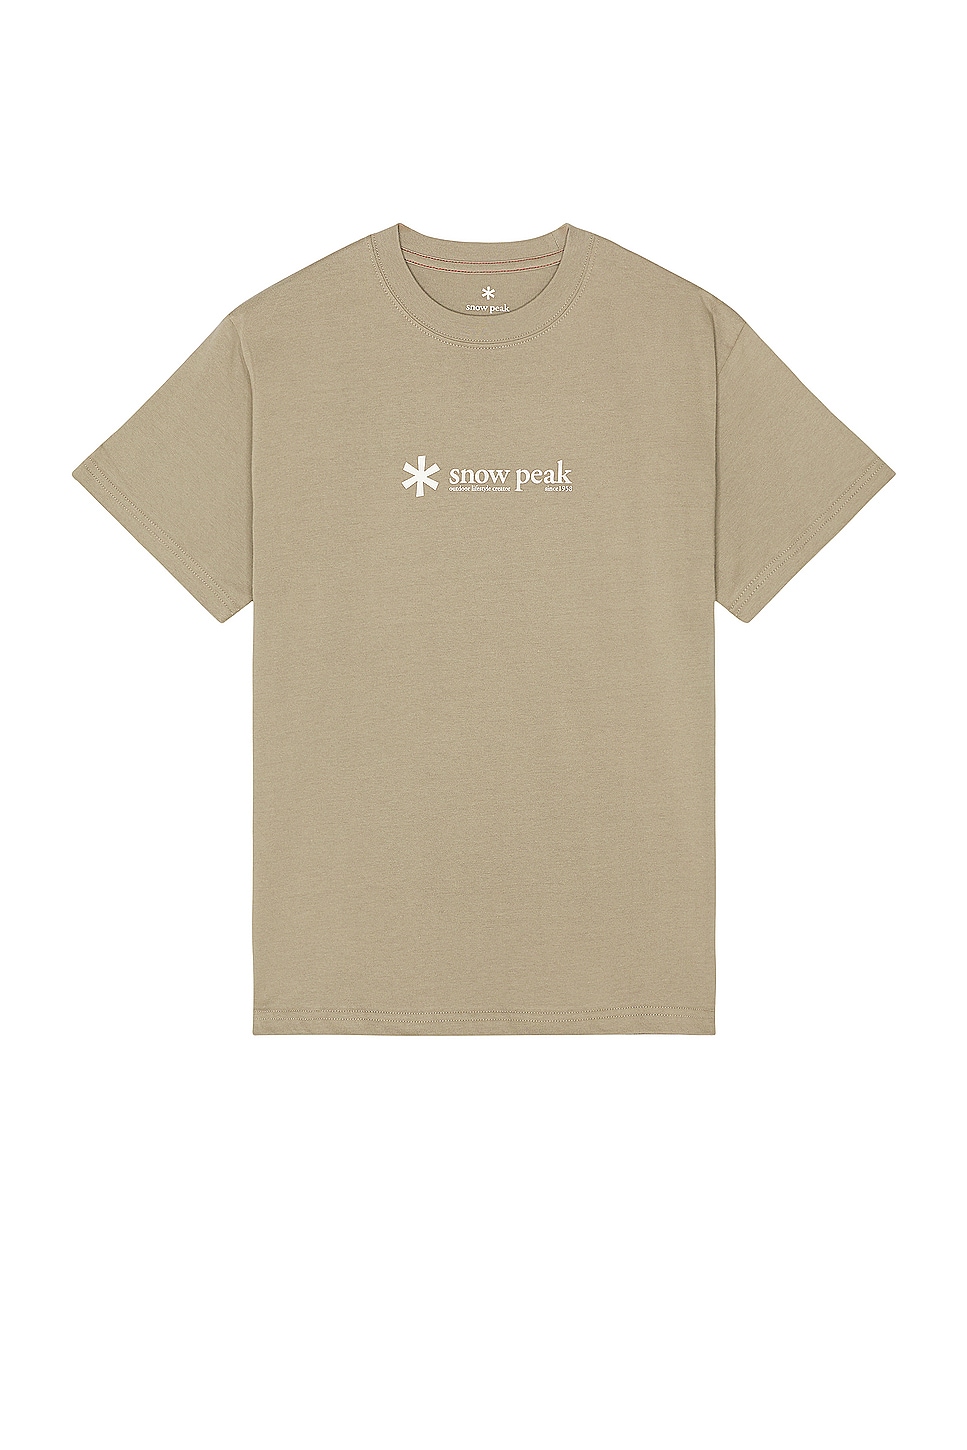 Image 1 of Snow Peak Soft Cotton Logo Short Sleeve T-Shirt in Pro